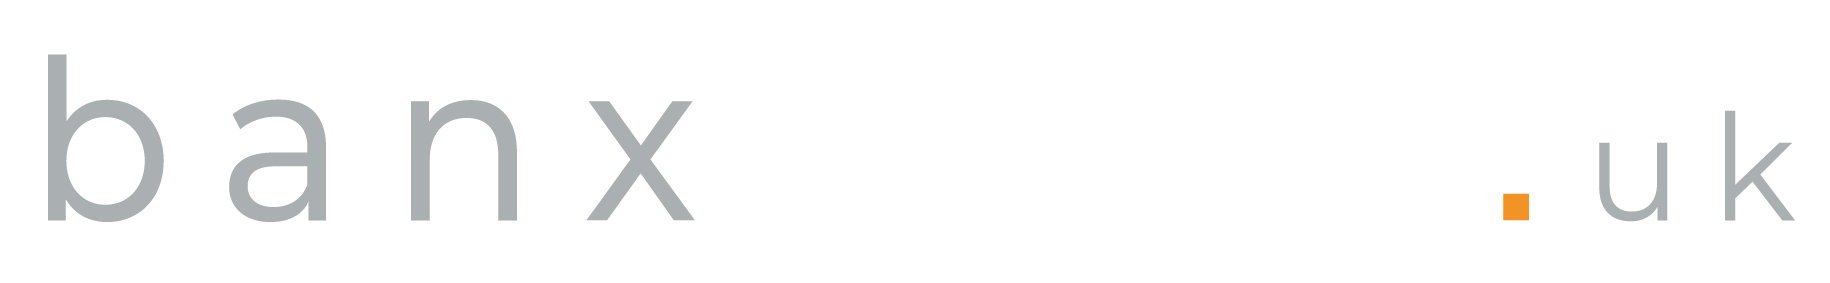 Banxlocal.uk logo